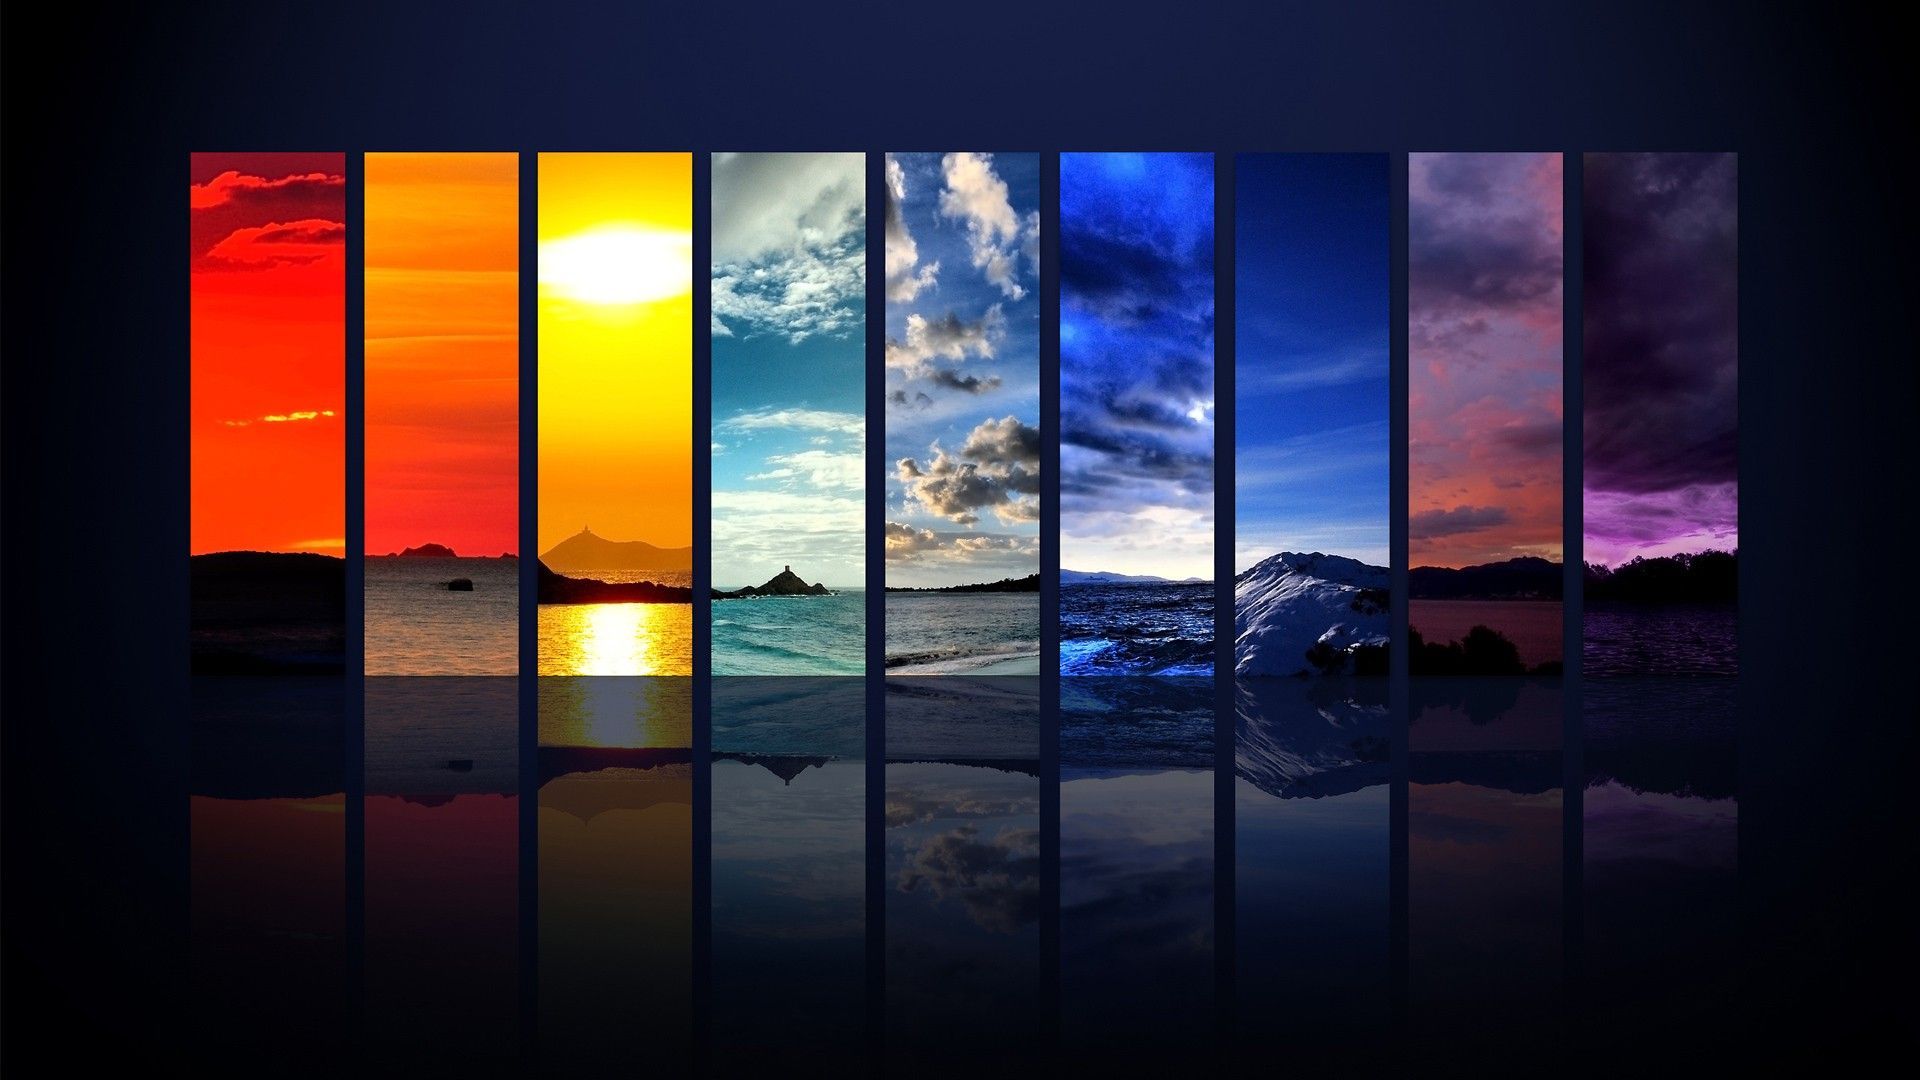 Cool-Desktop-Backgrounds-HD-Wallpaper1 | wallpapers55.com - Best ...